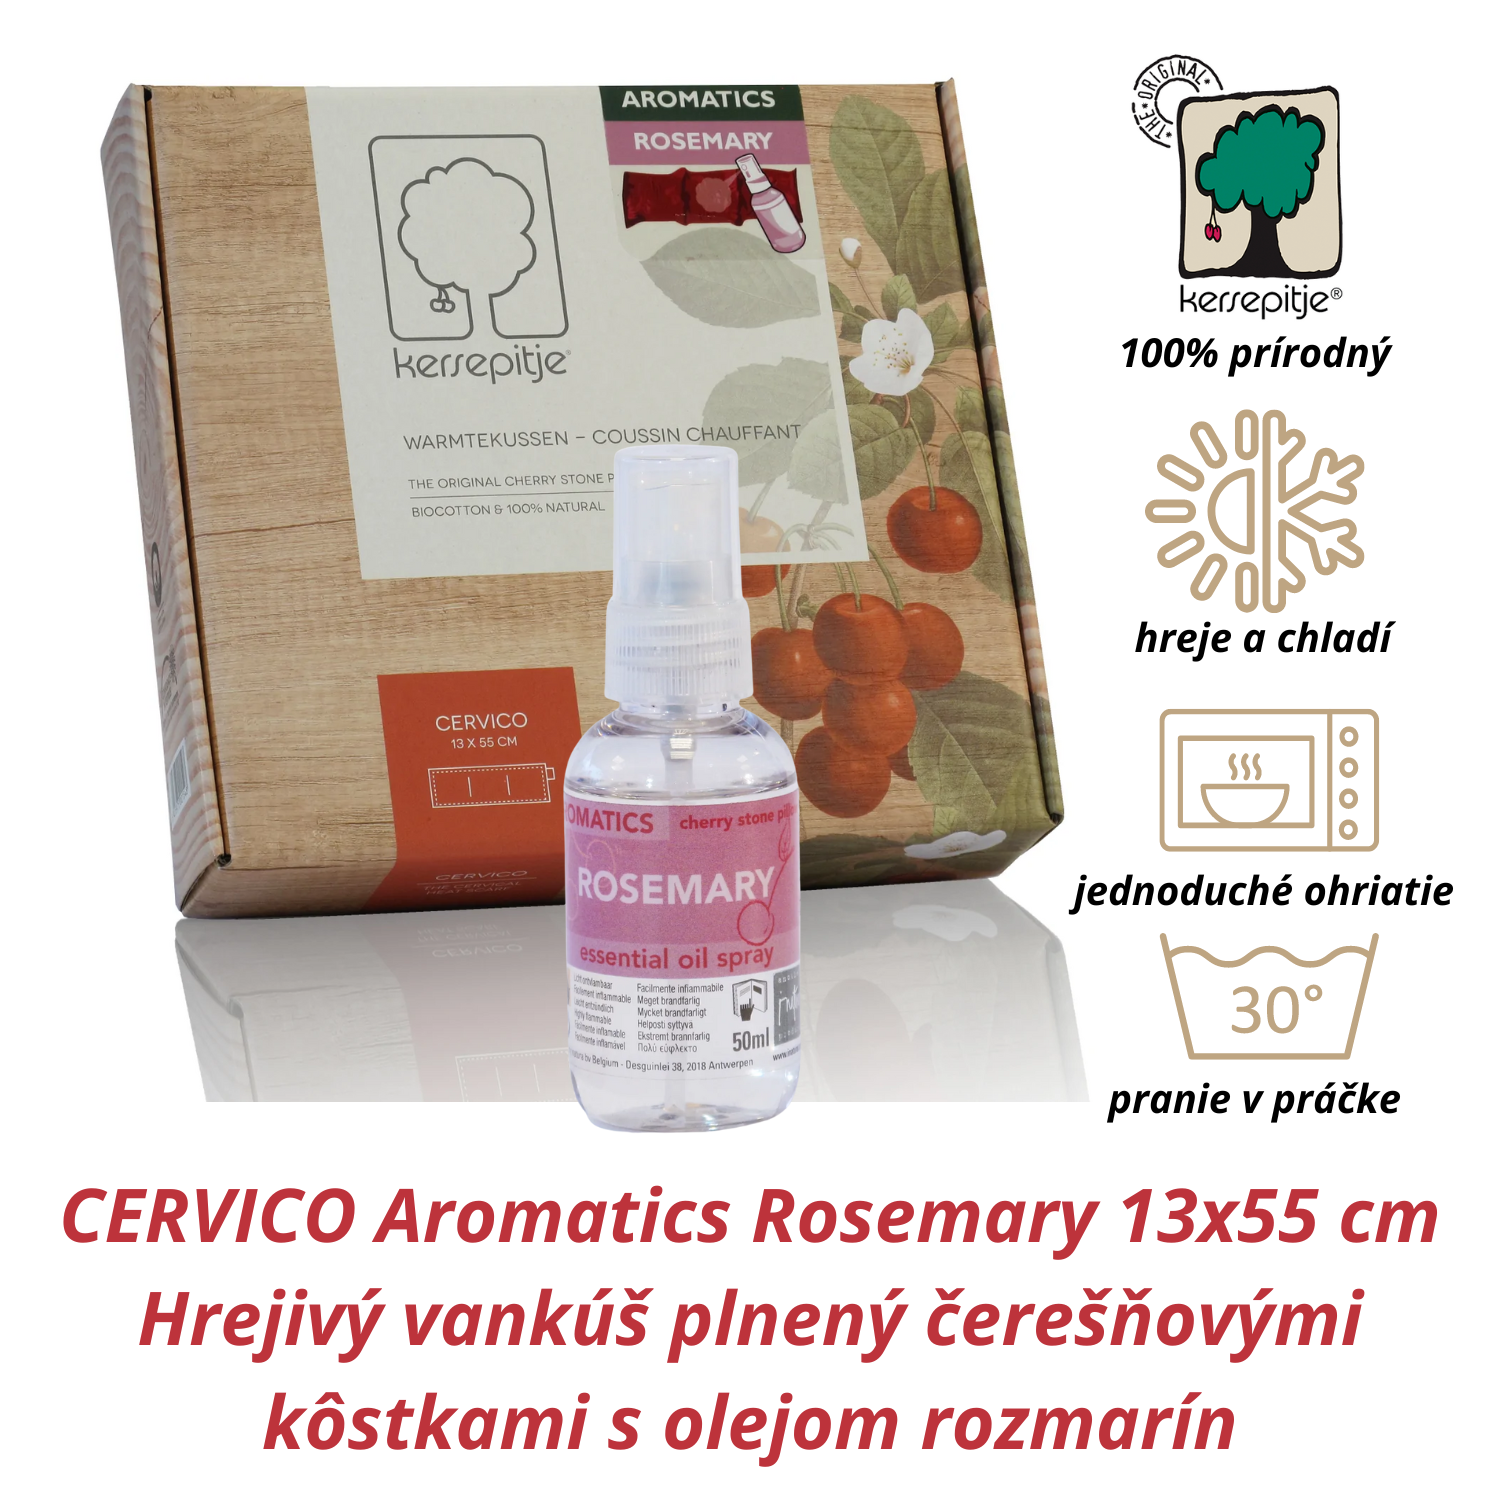 INATURA Čerešničky Cervico Aromatics Rosemary 13x55 cm